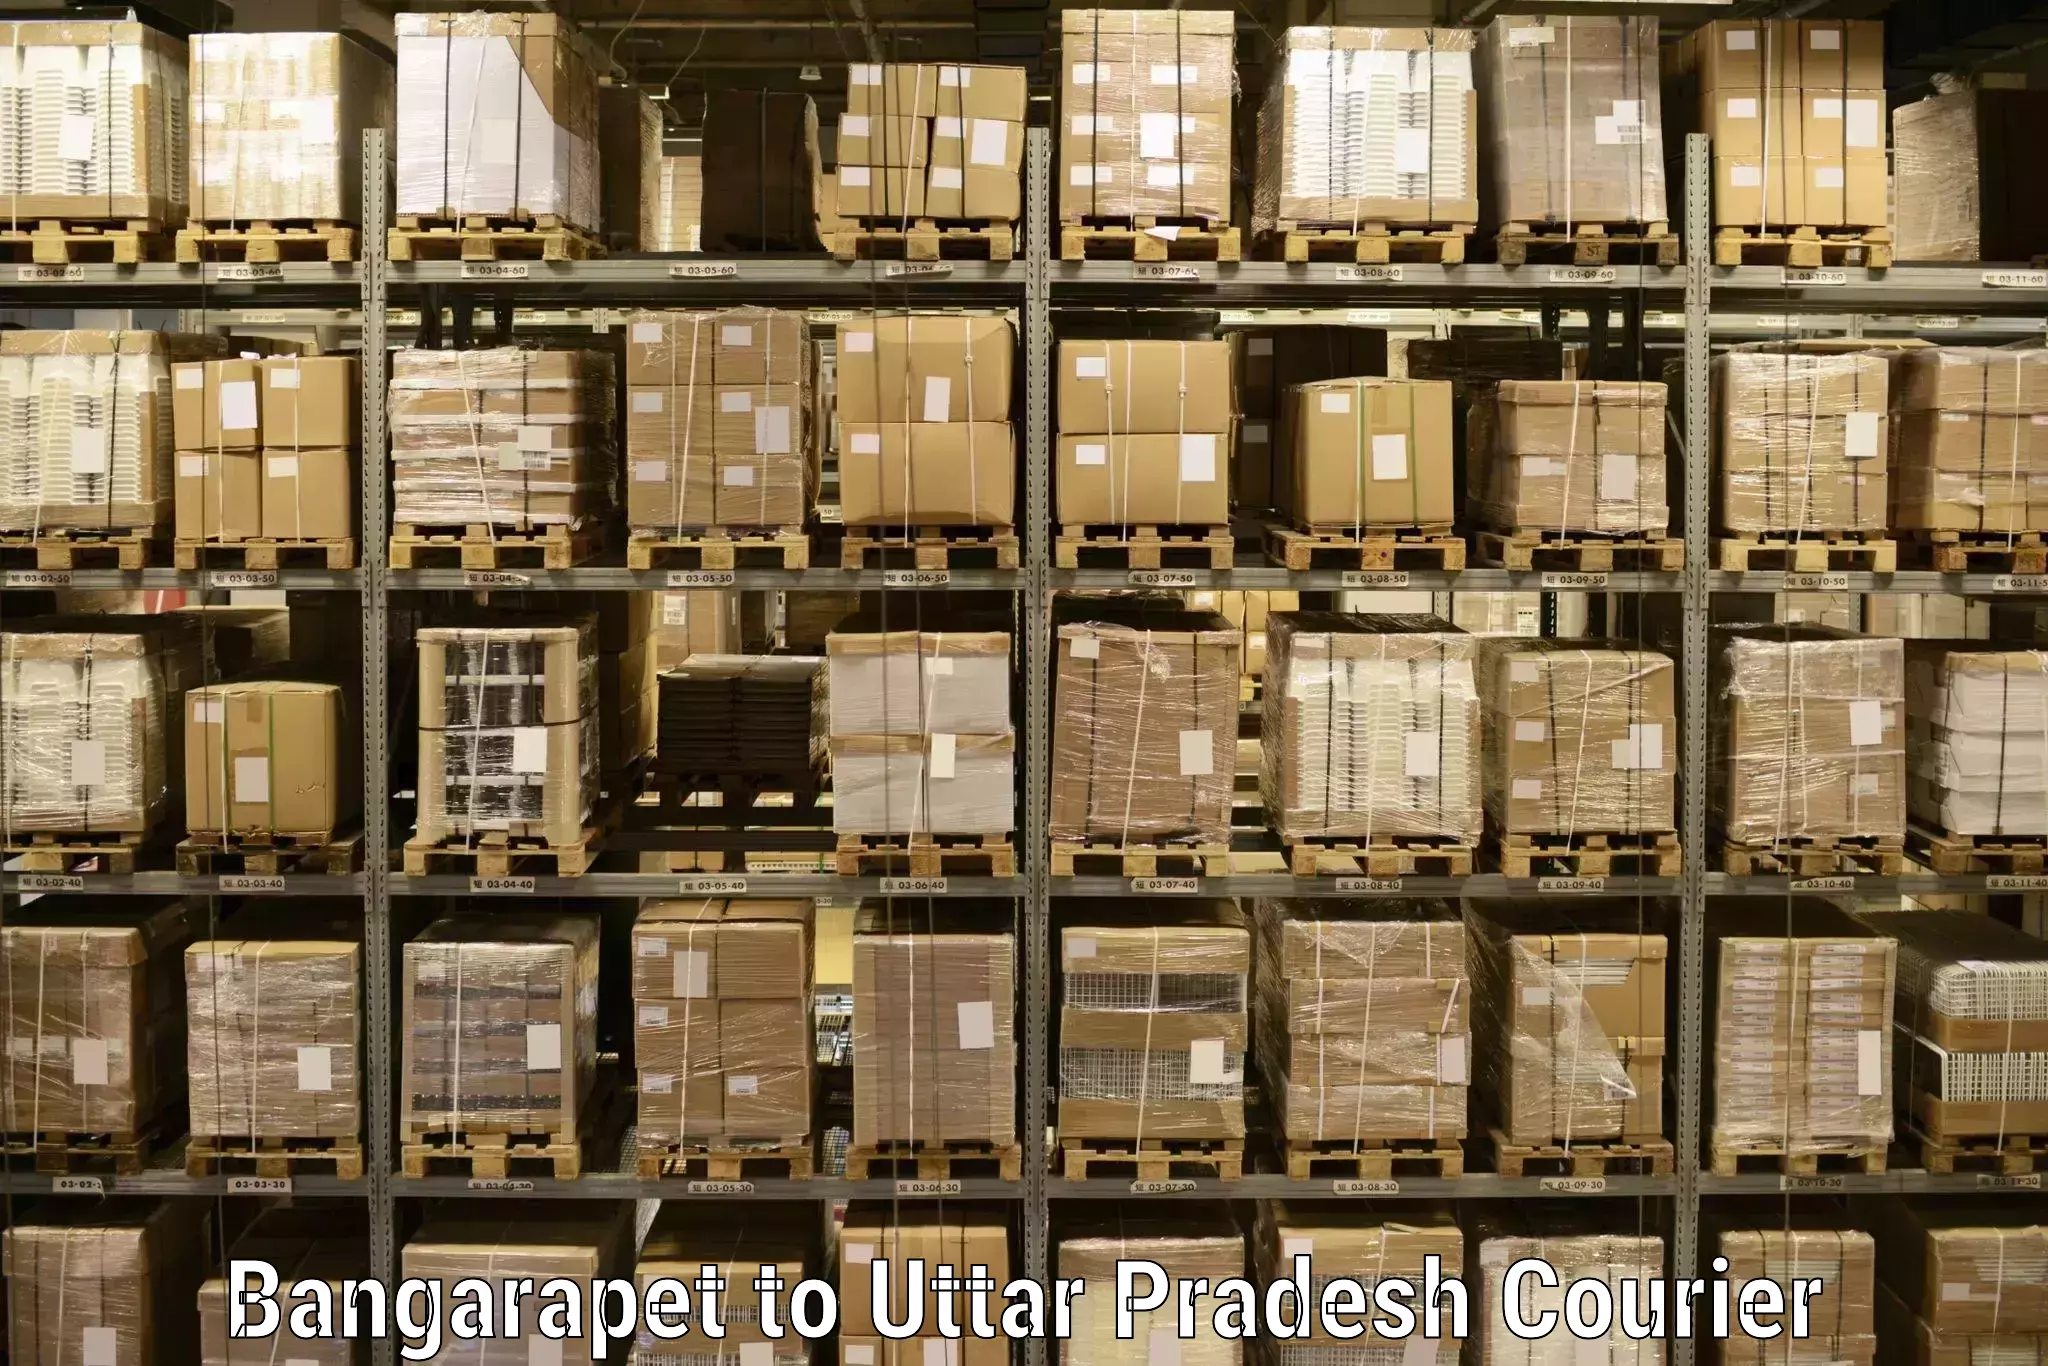 Courier service partnerships Bangarapet to Kanth